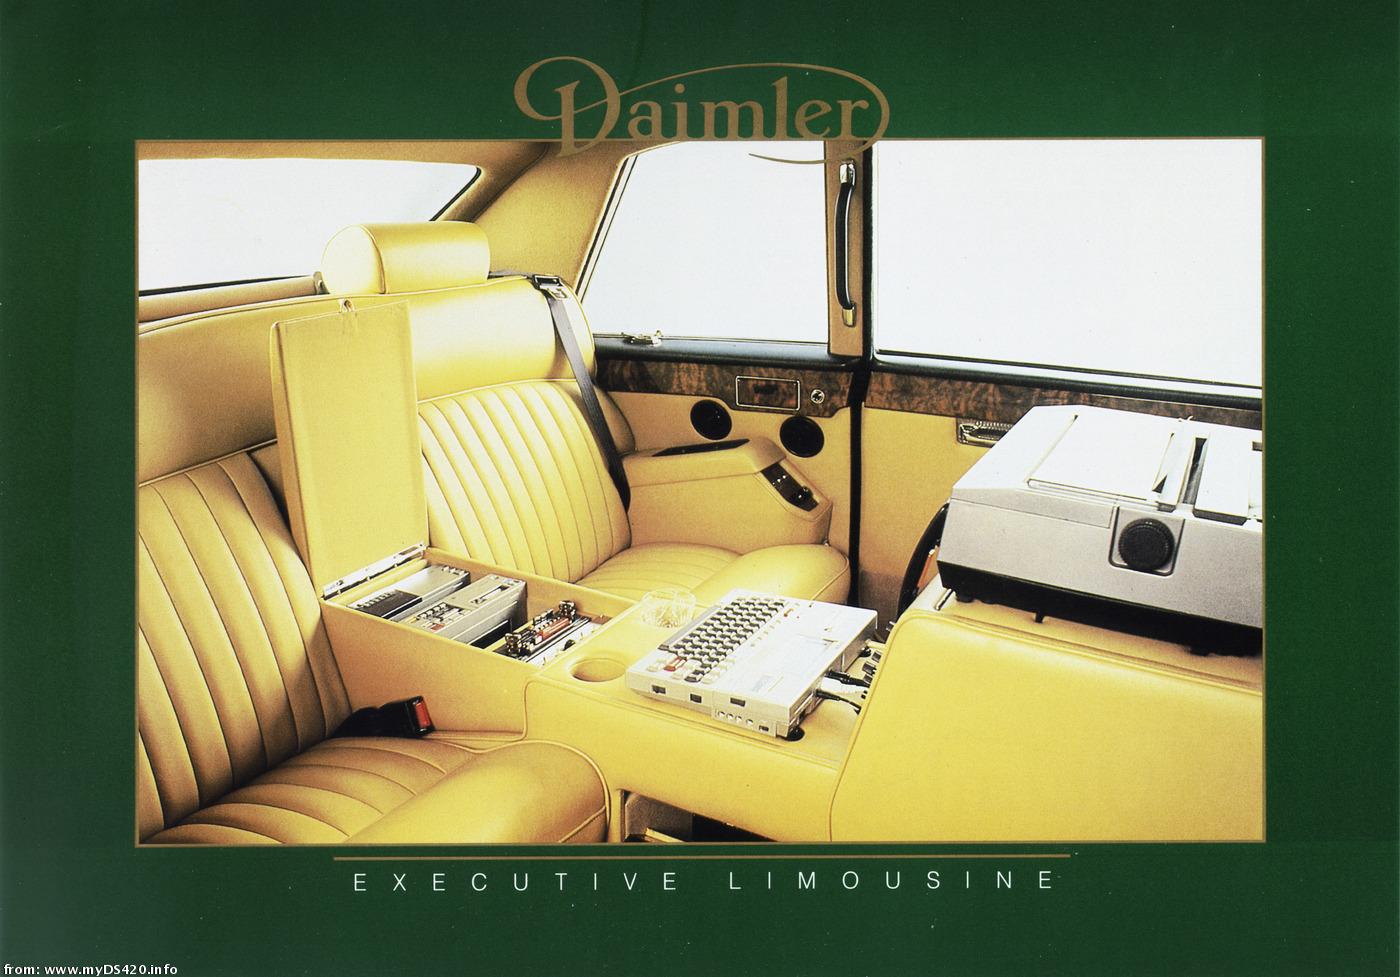 Executive Limousine brochure p1